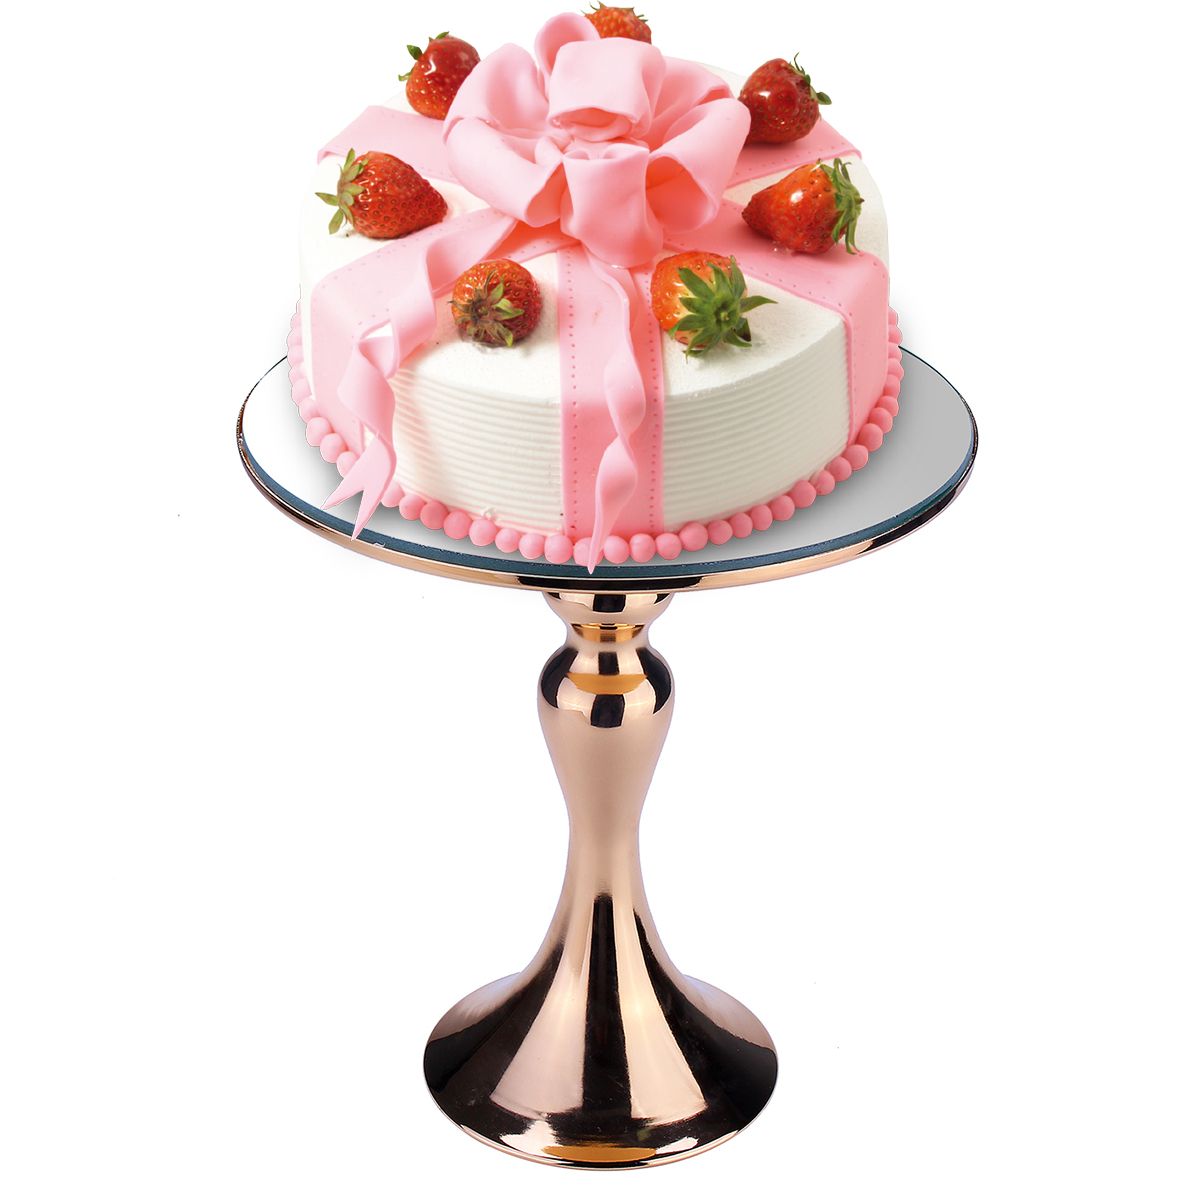 Gold-Mirror-Cake-Dessert-Stand-Holder-Round-Metal-Wedding-Party-Display-Decorations-1443803